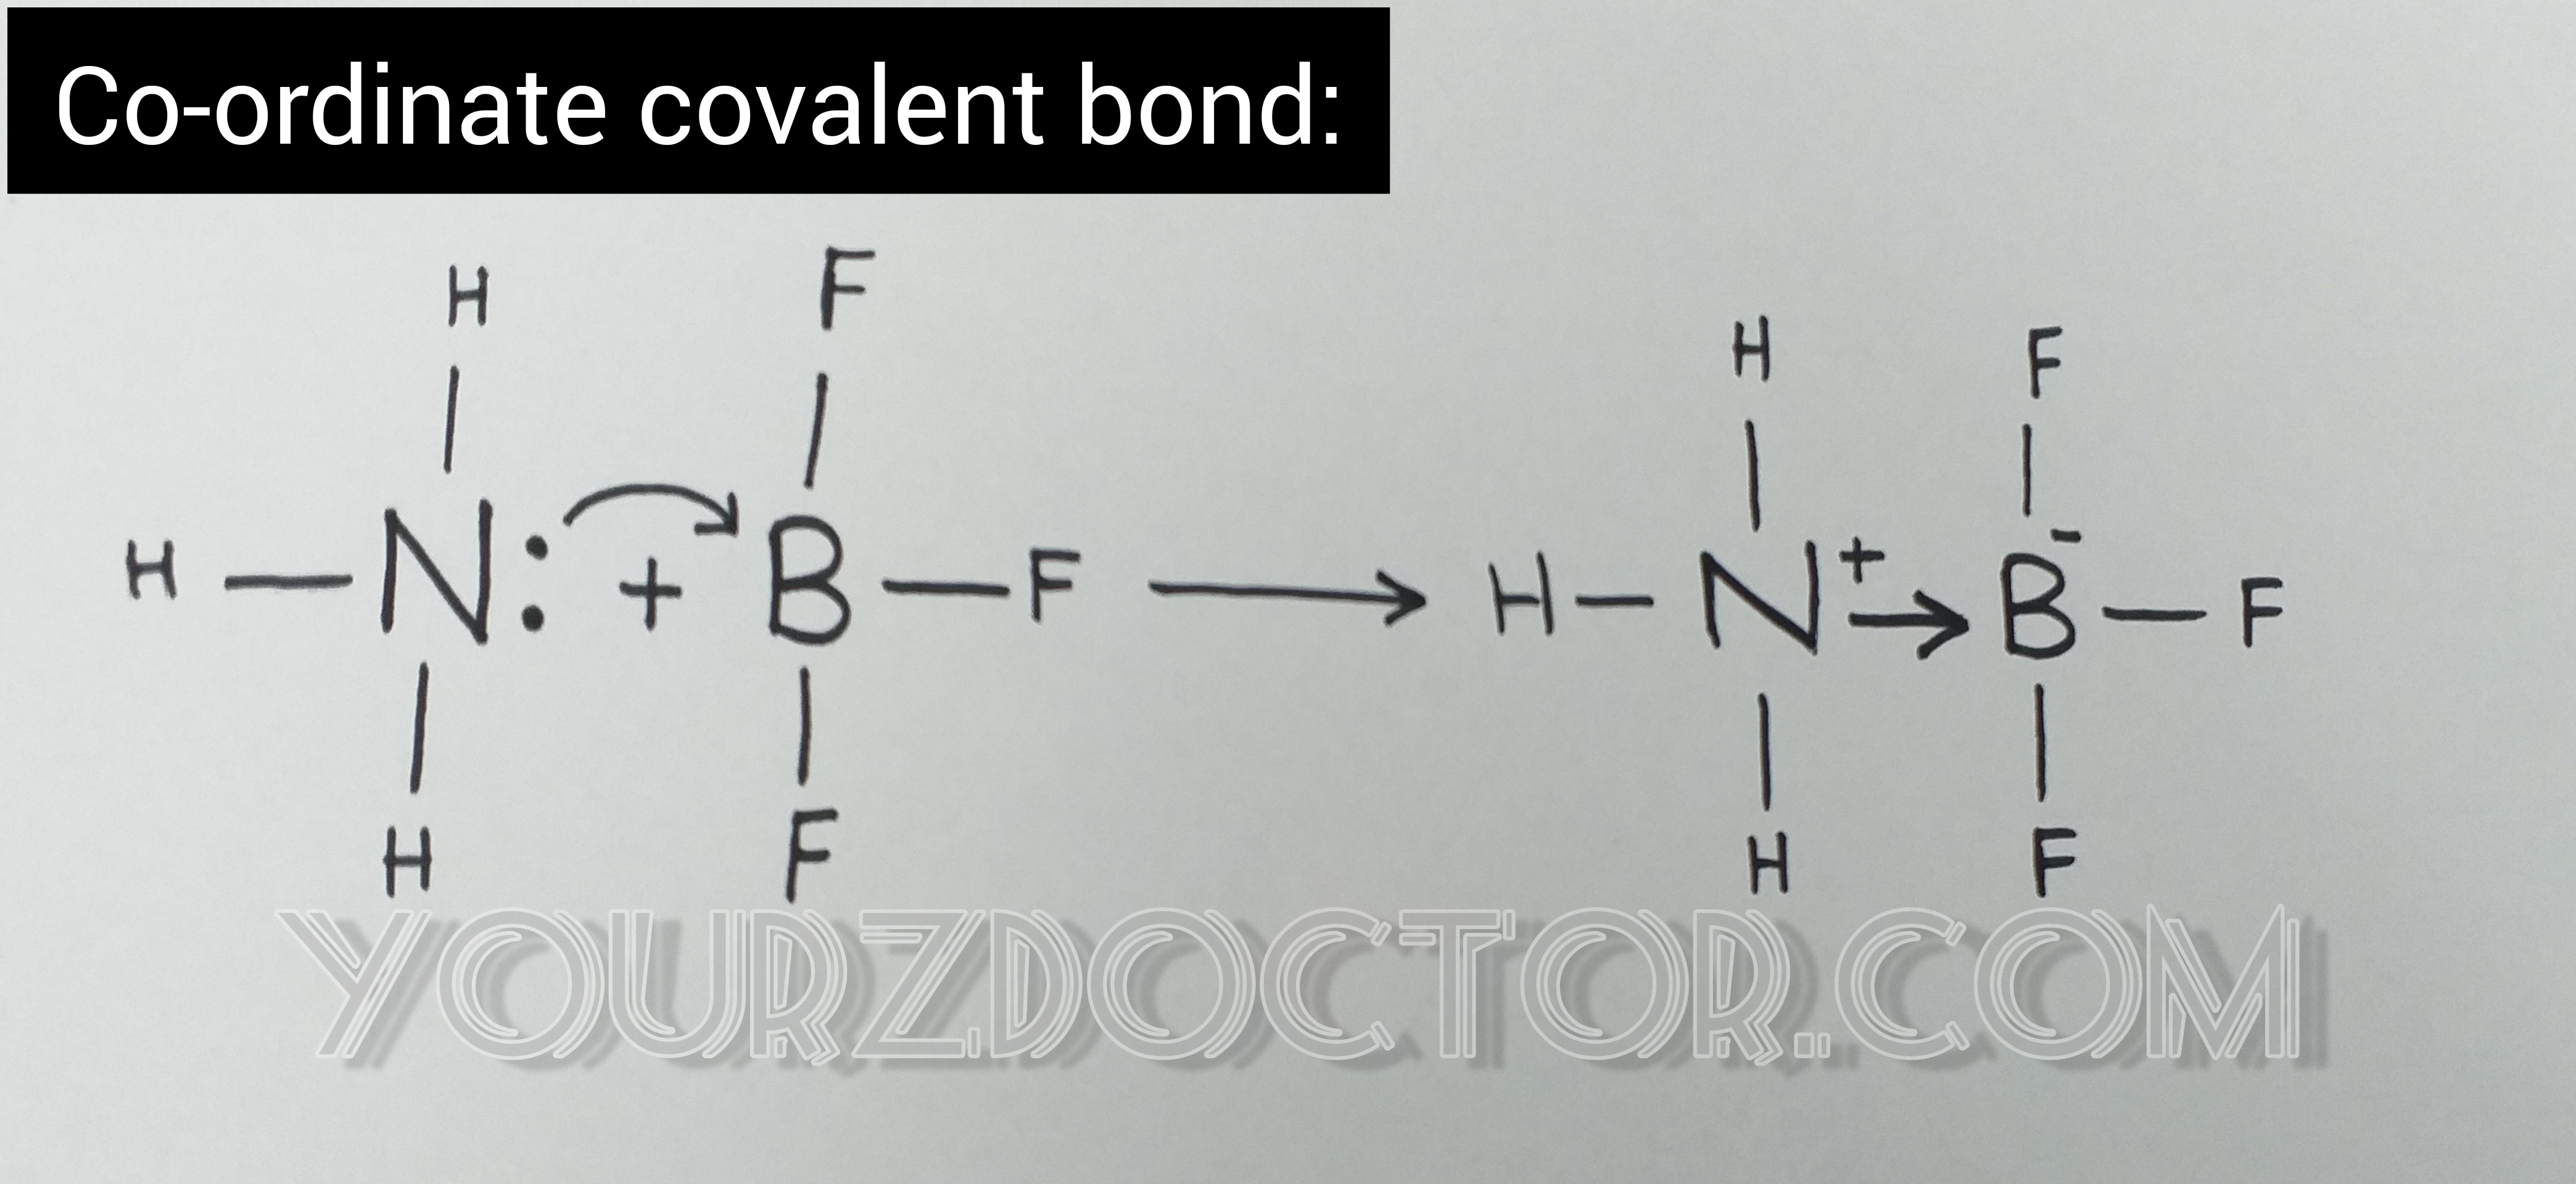 Co-ordinate covalent chemical bond